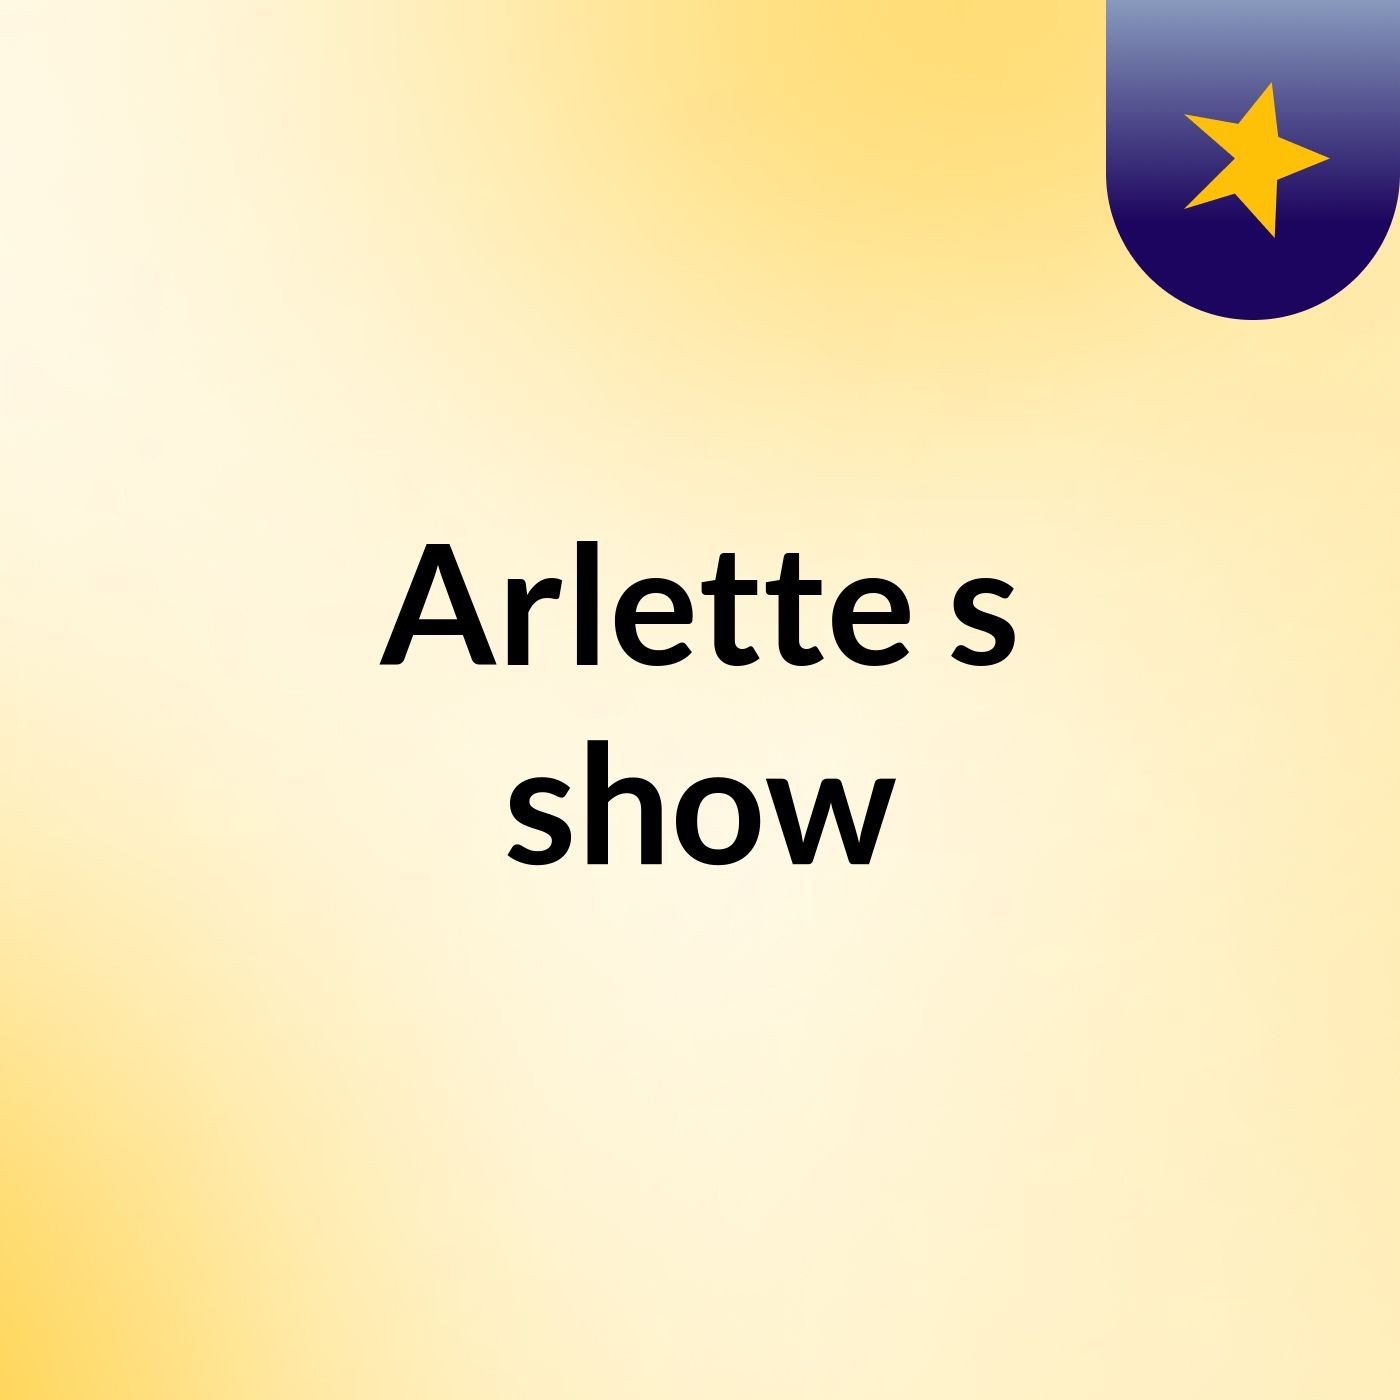 Arlette's show